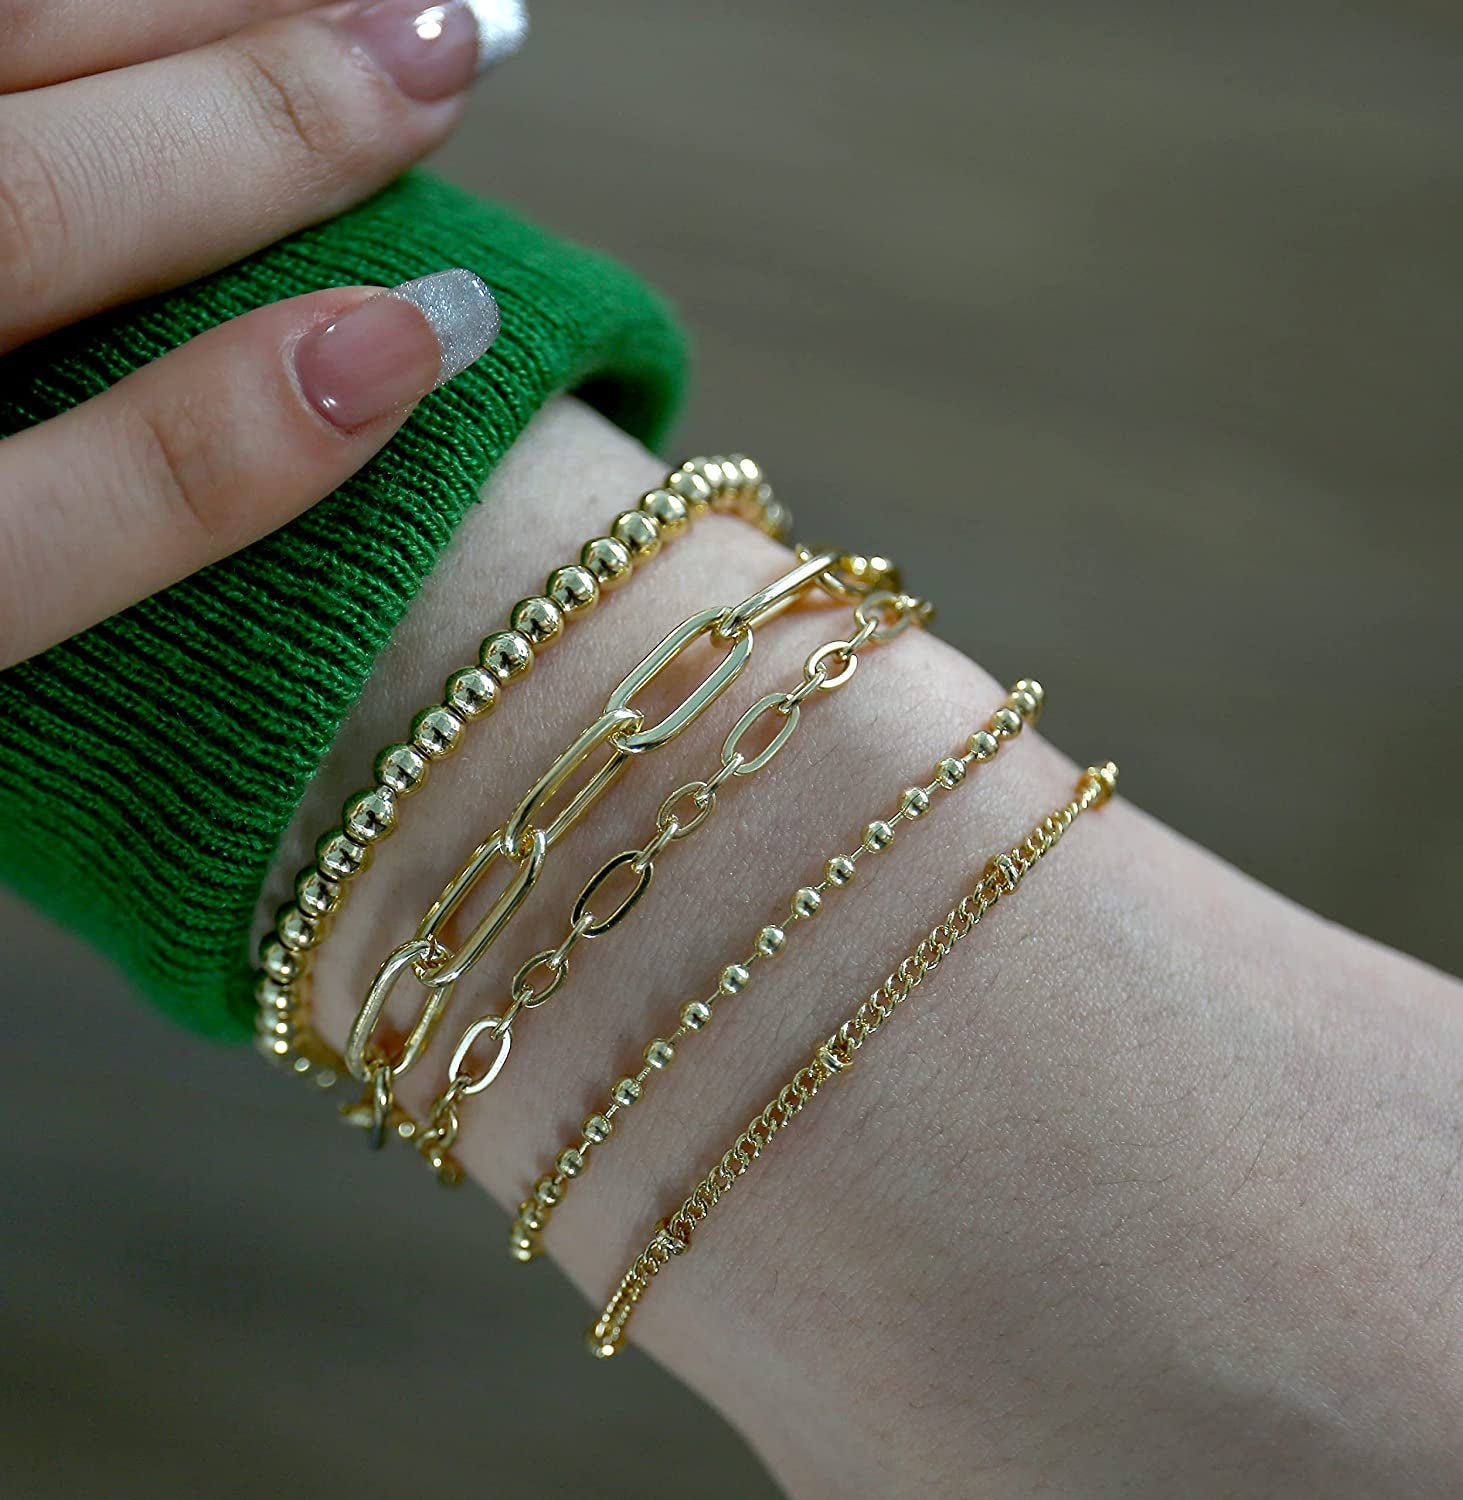 Gold Bracelet Sets for Women Girls 14K Real Gold Chain Dainty Link Paperclip Bracelets Stake Adjustable Layered Metal Link Bracelet Set Fashion Jewelry